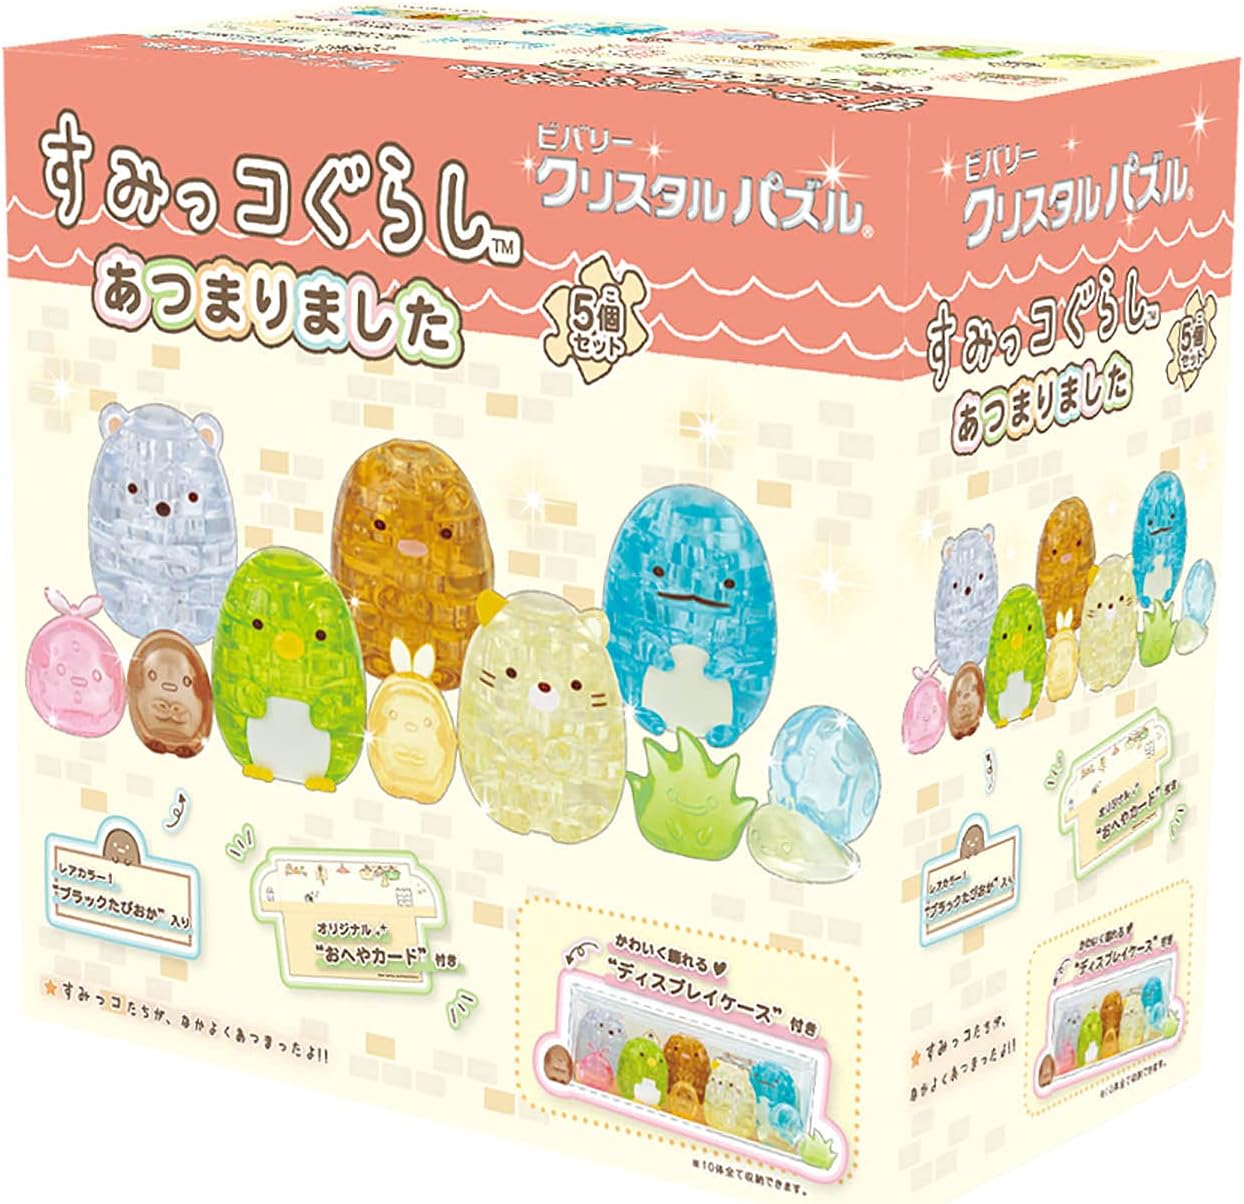 Crystal Puzzle Sumikko Gurashi, Adorable Display Case Included